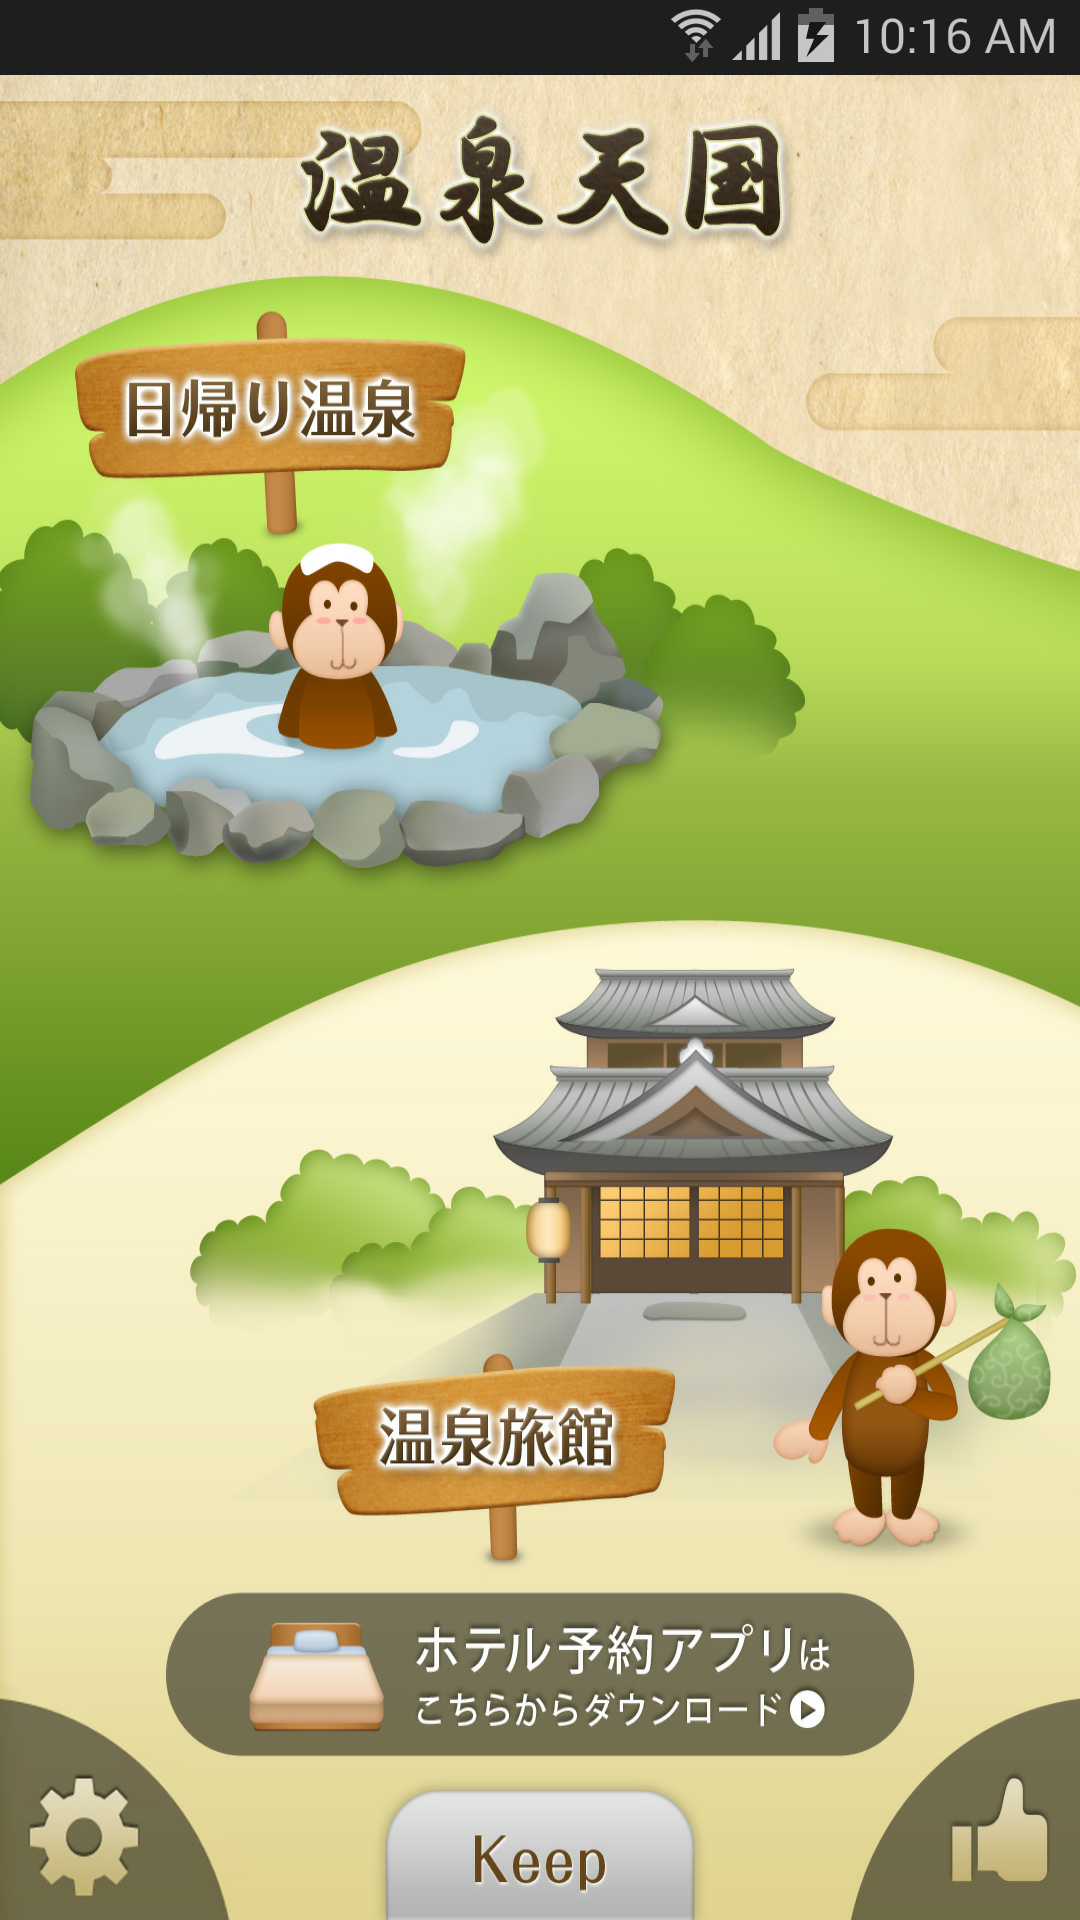 Android application Japanese hot spring heaven screenshort